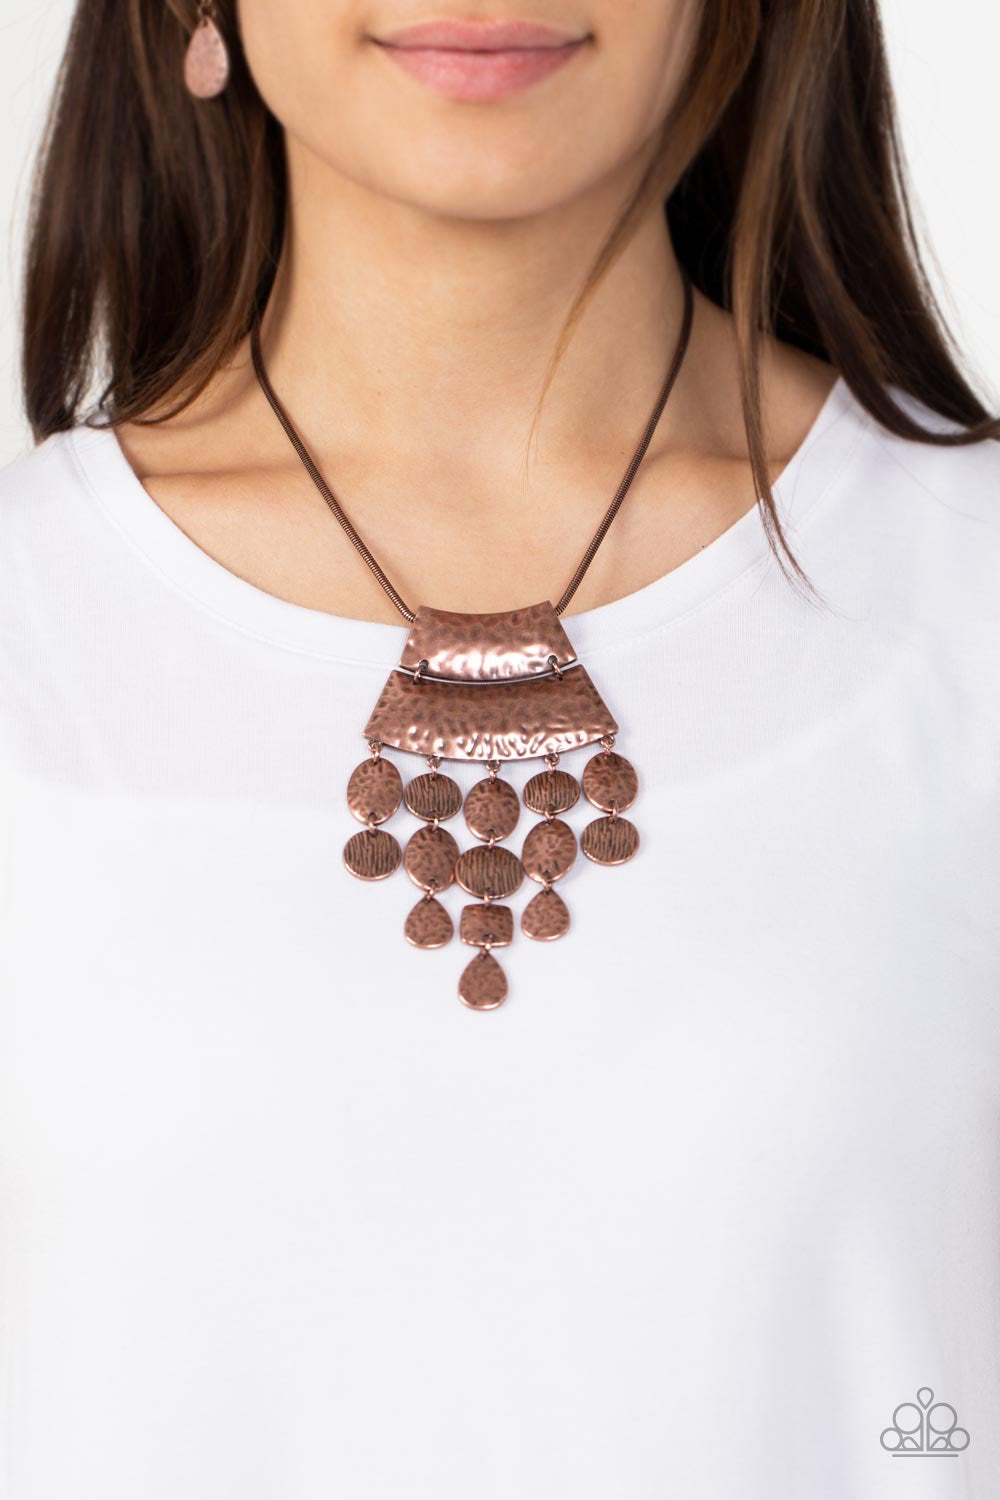 Paparazzi Totem Trek - Copper Necklace   -paparazzi jewelry images 